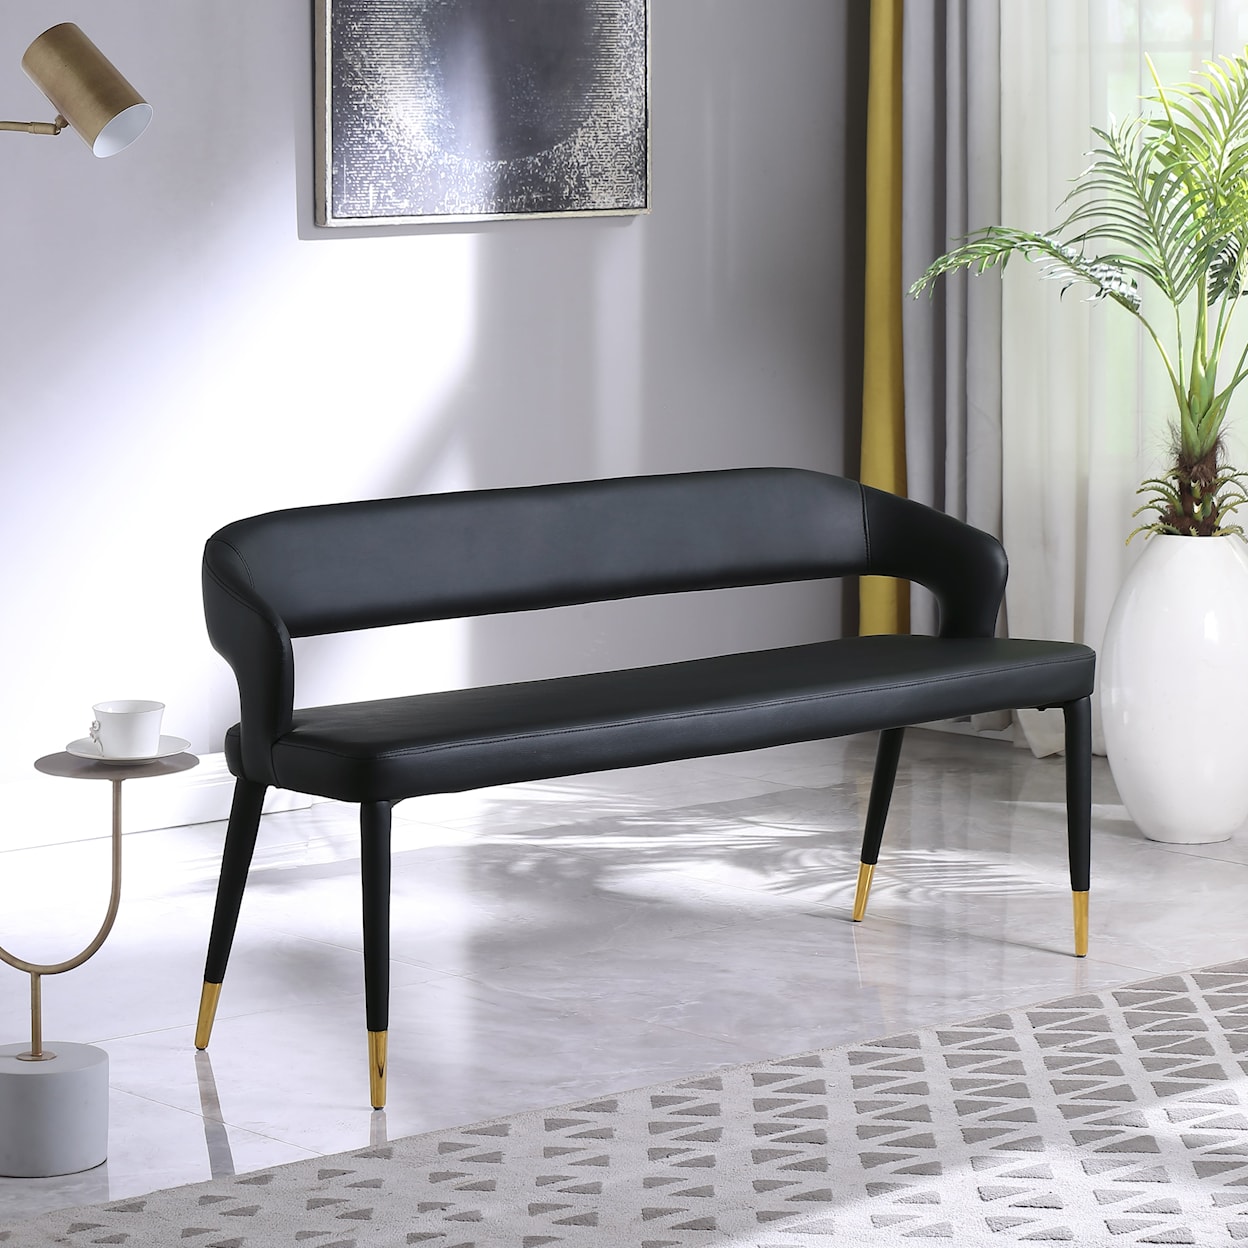 Meridian Furniture Destiny Upholstered Black Faux Leather Bench